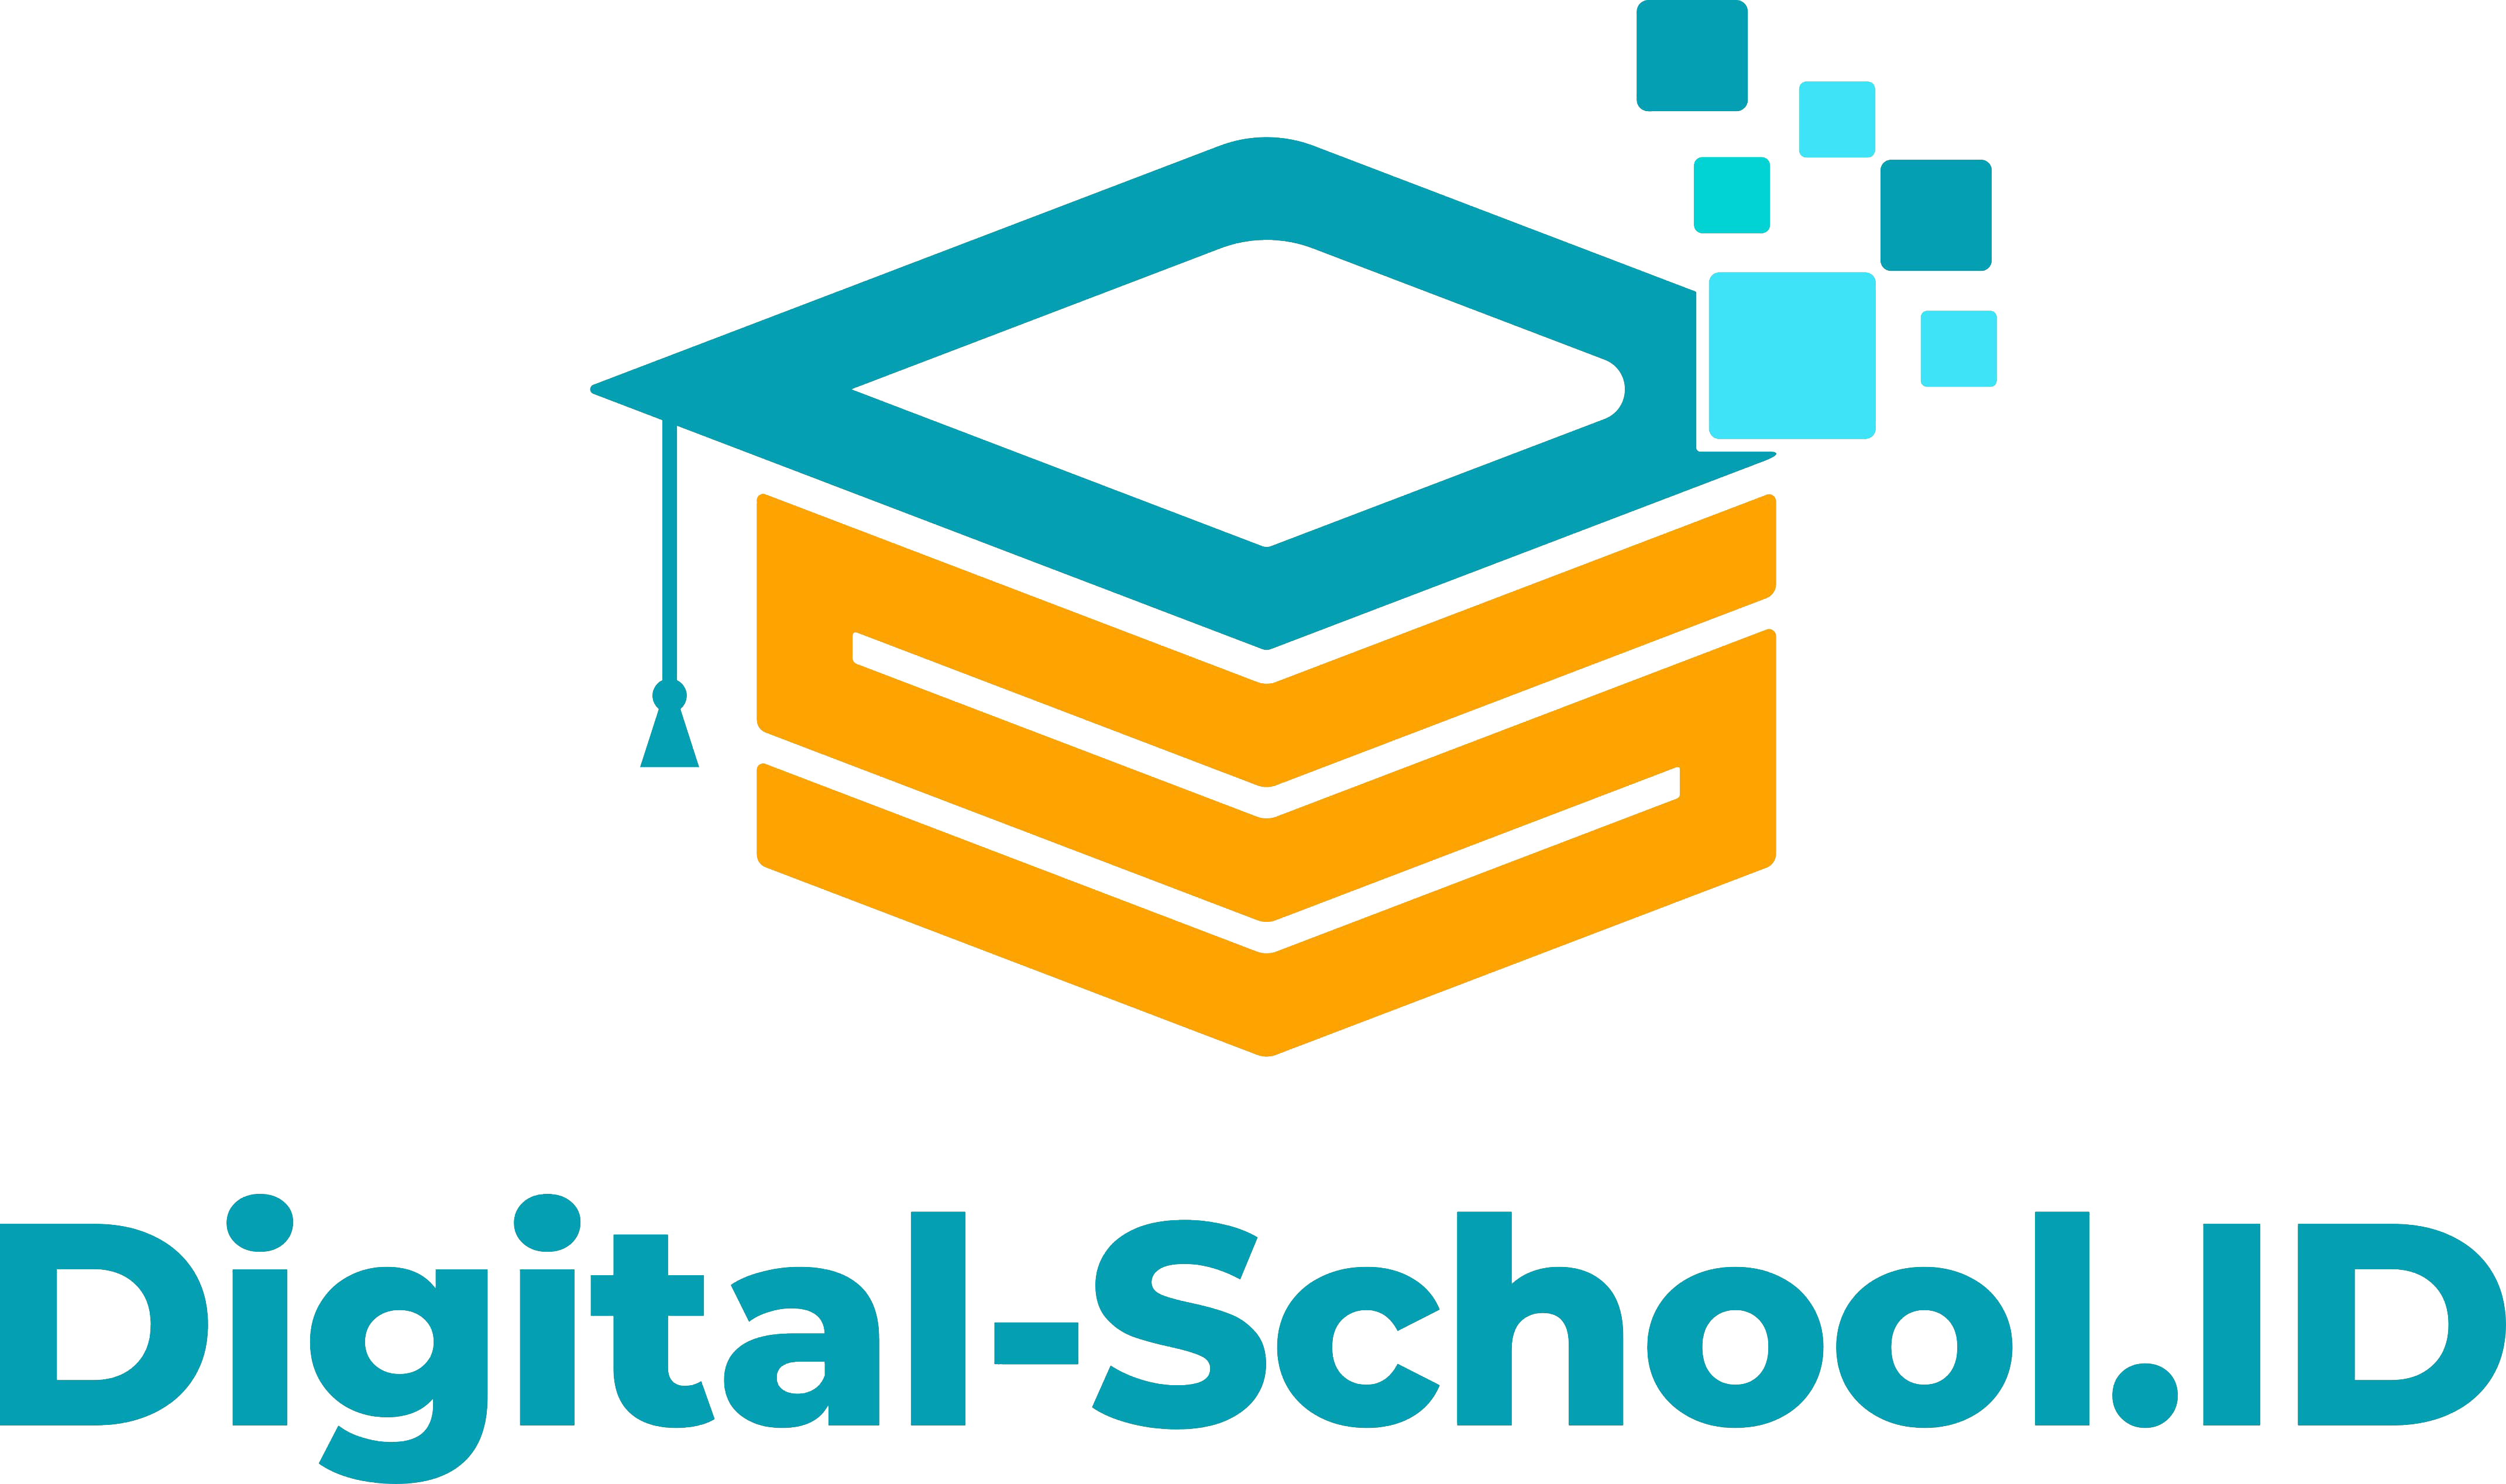 Digital-school.id